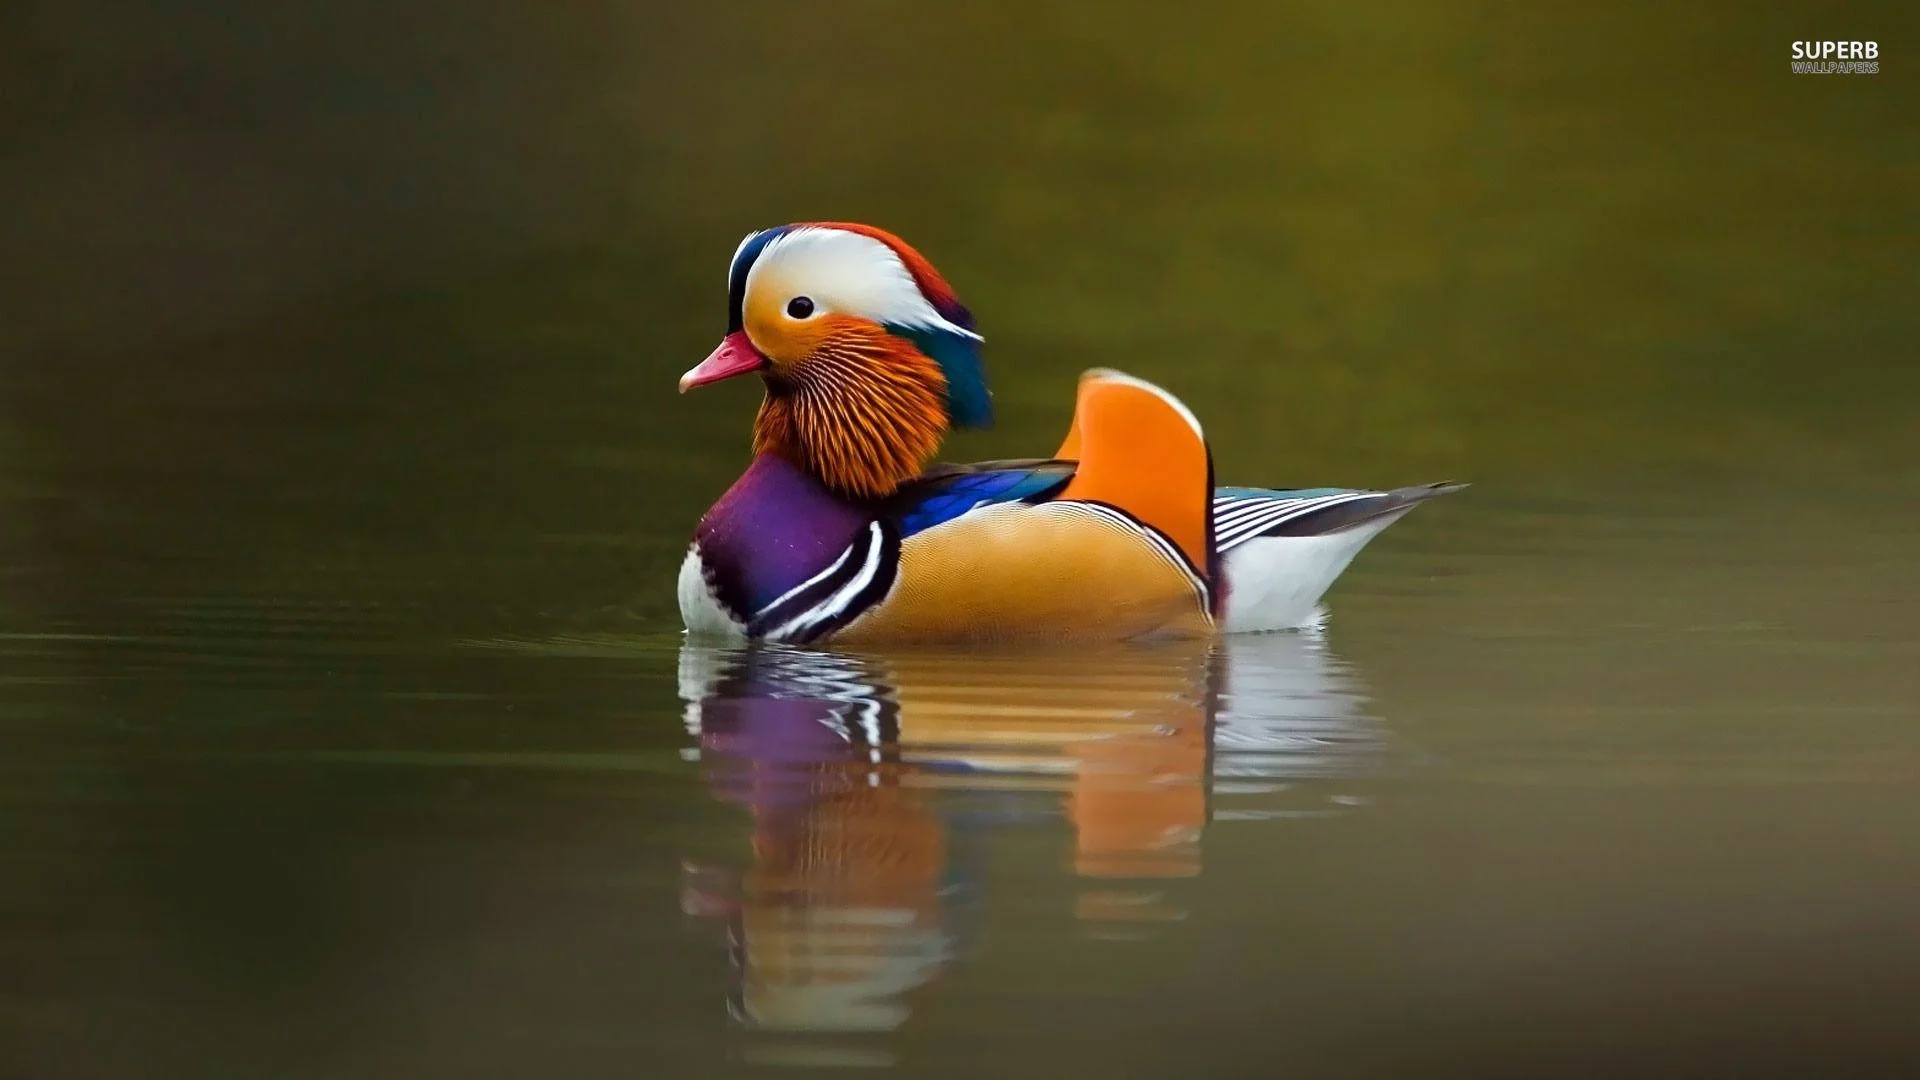 Mandarin duck 19848 1920×1080